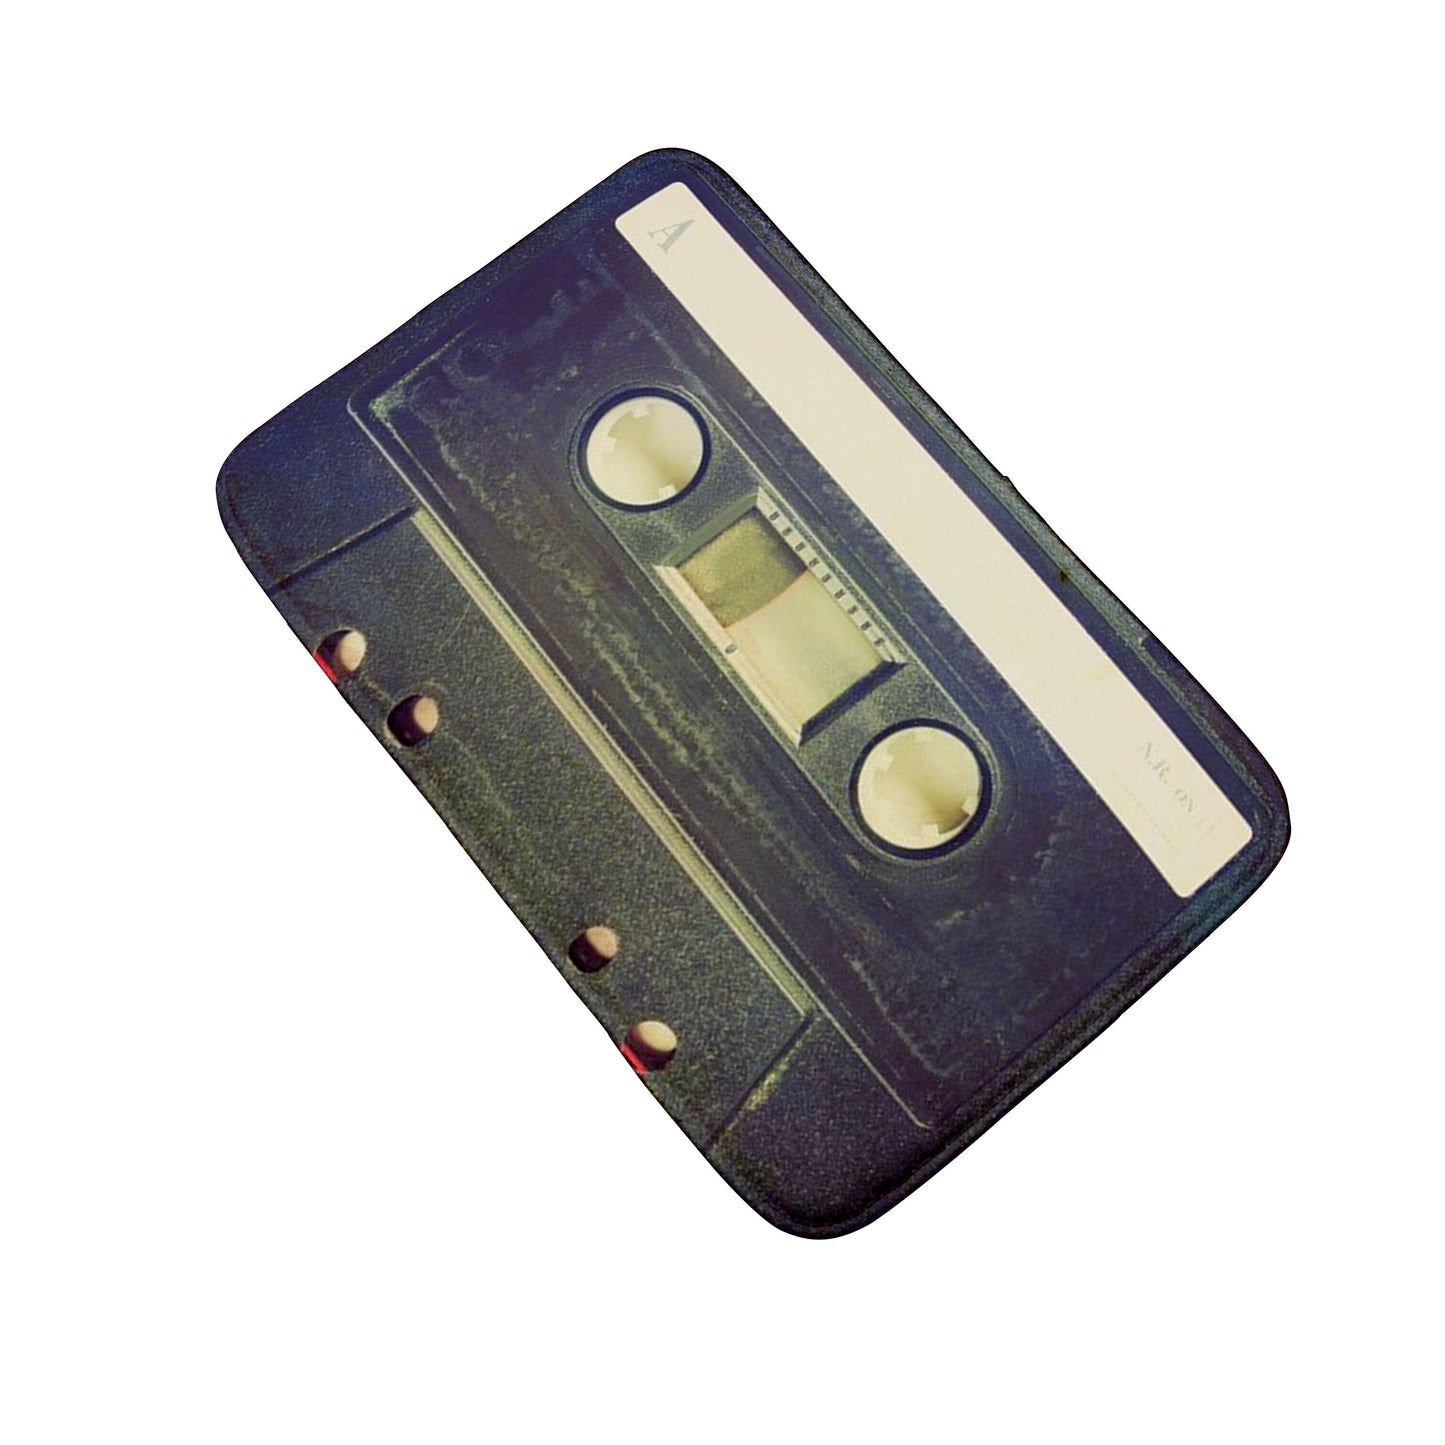 TEEK - A Bunch of Cassette Tape Rugs HOME DECOR theteekdotcom 8 15.75x23.62in 20-25 days